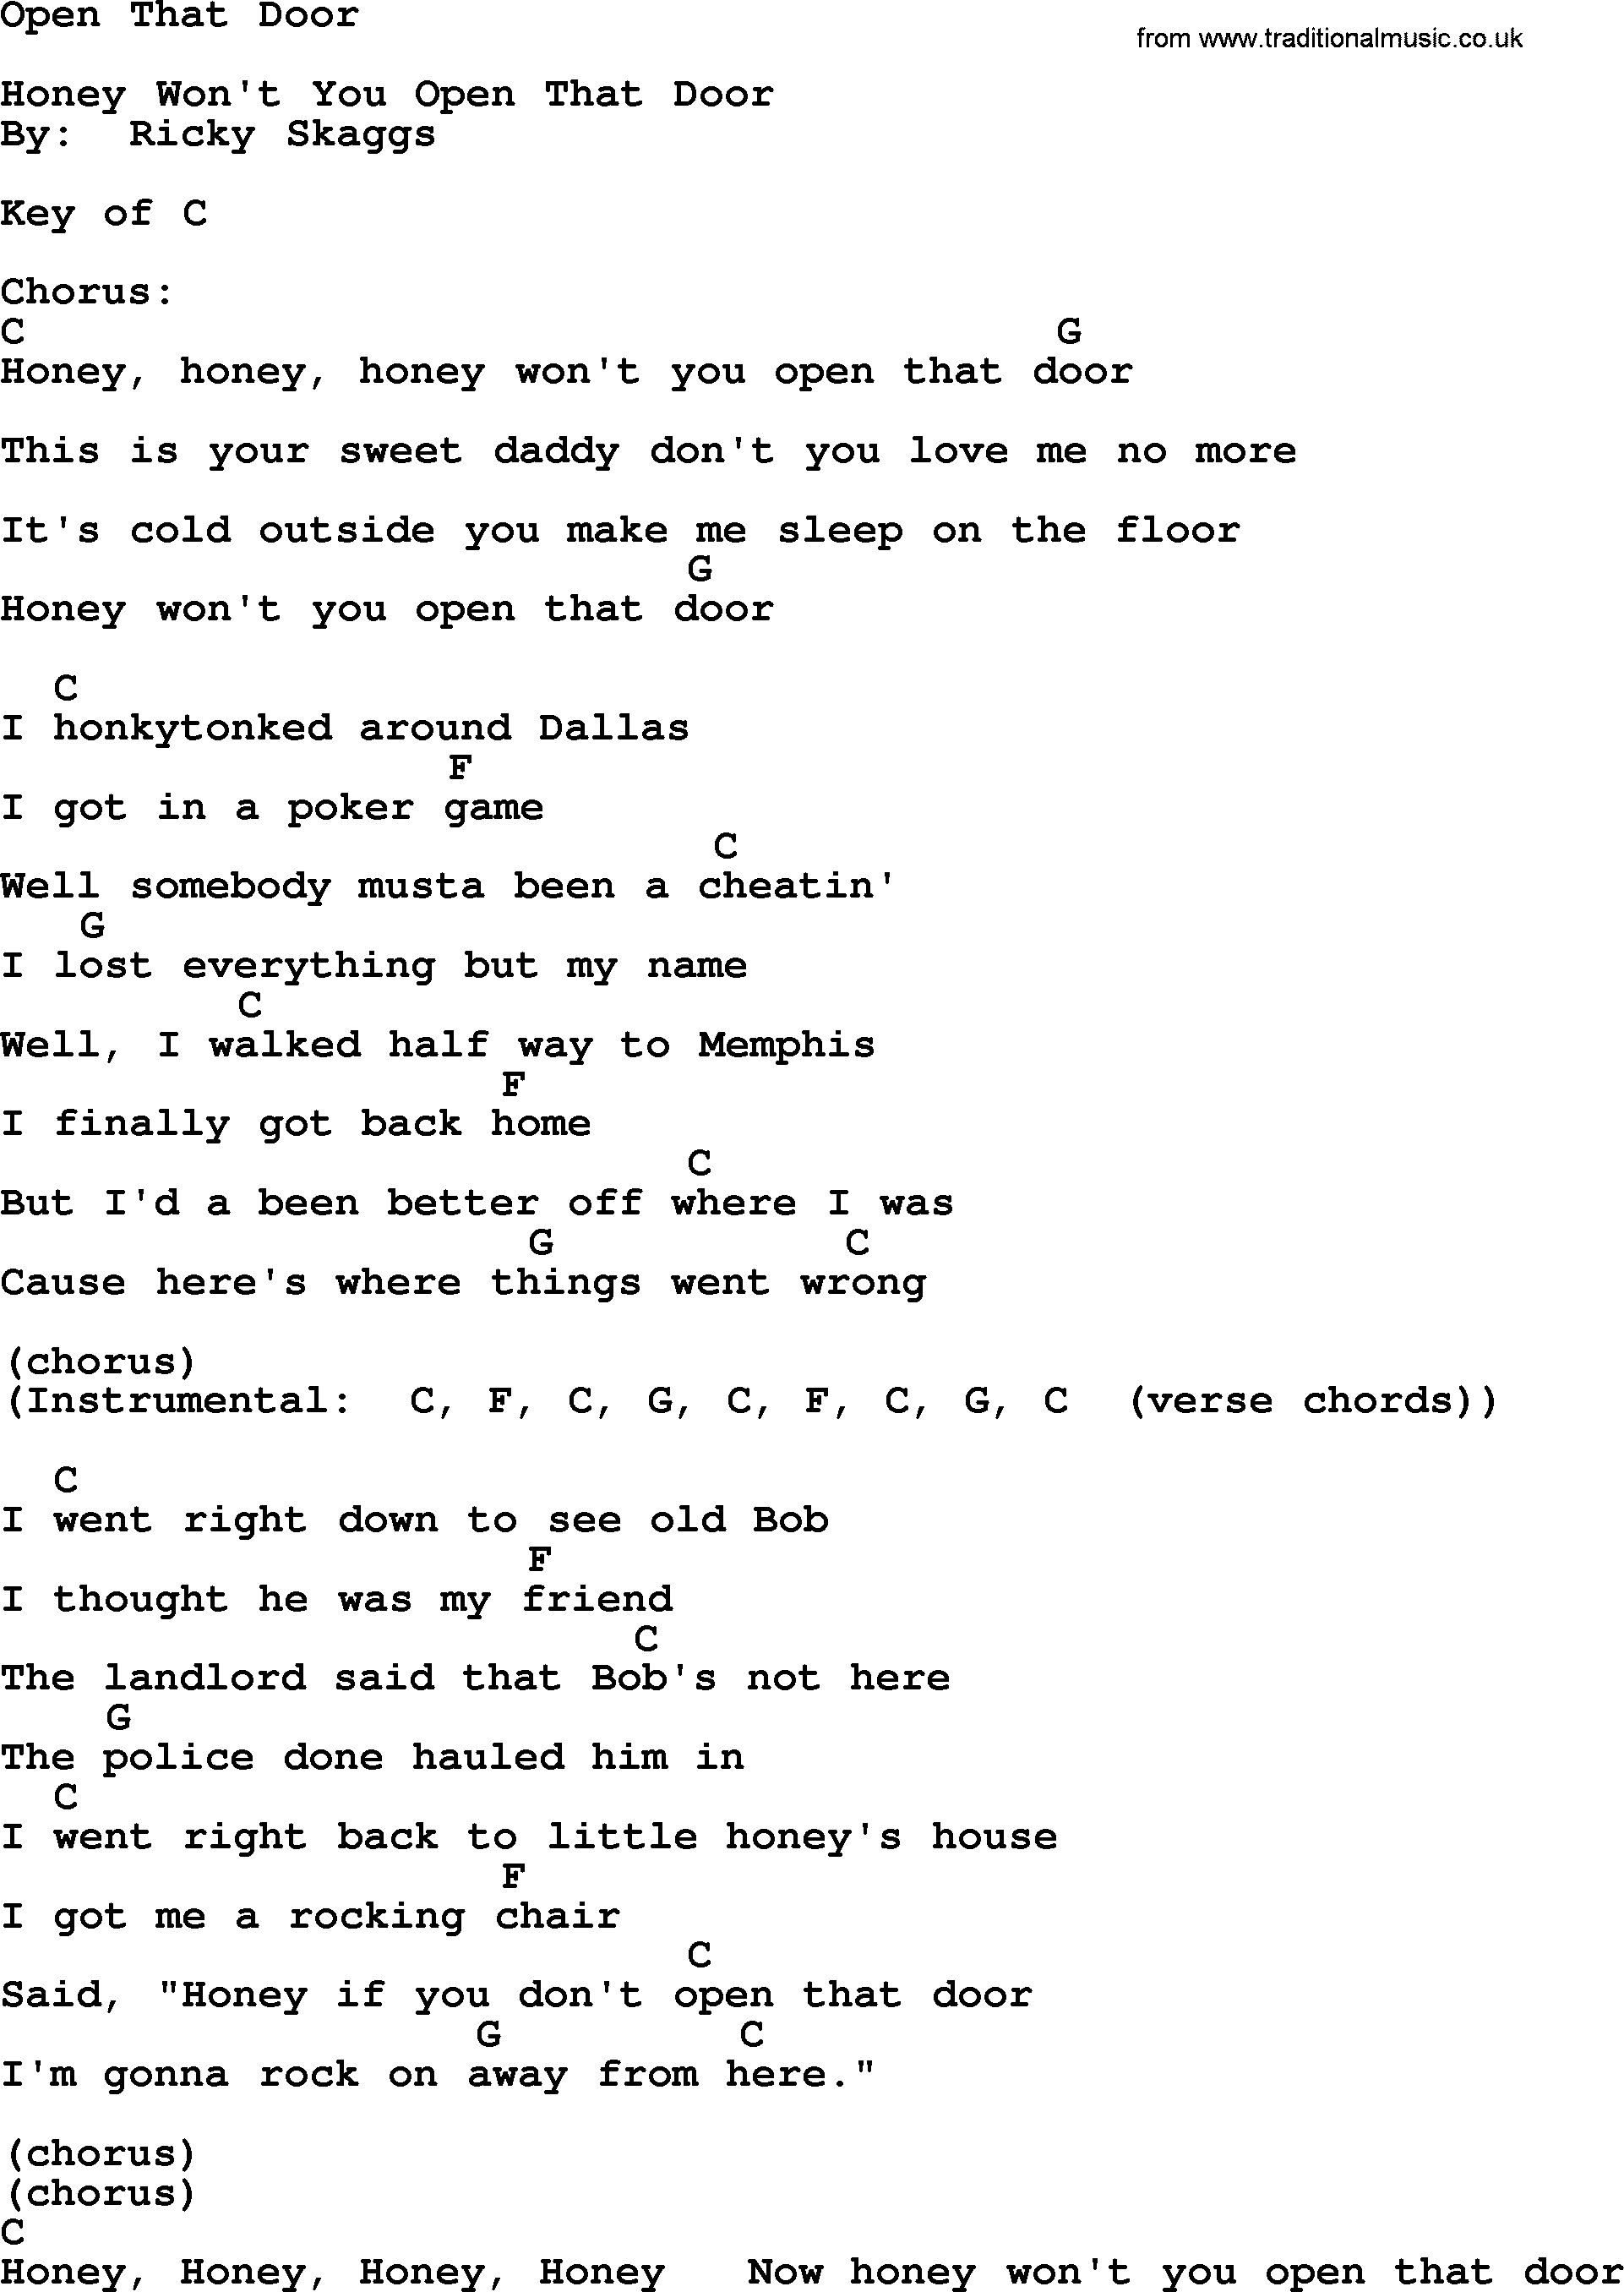 Bluegrass song: Open That Door, lyrics and chords